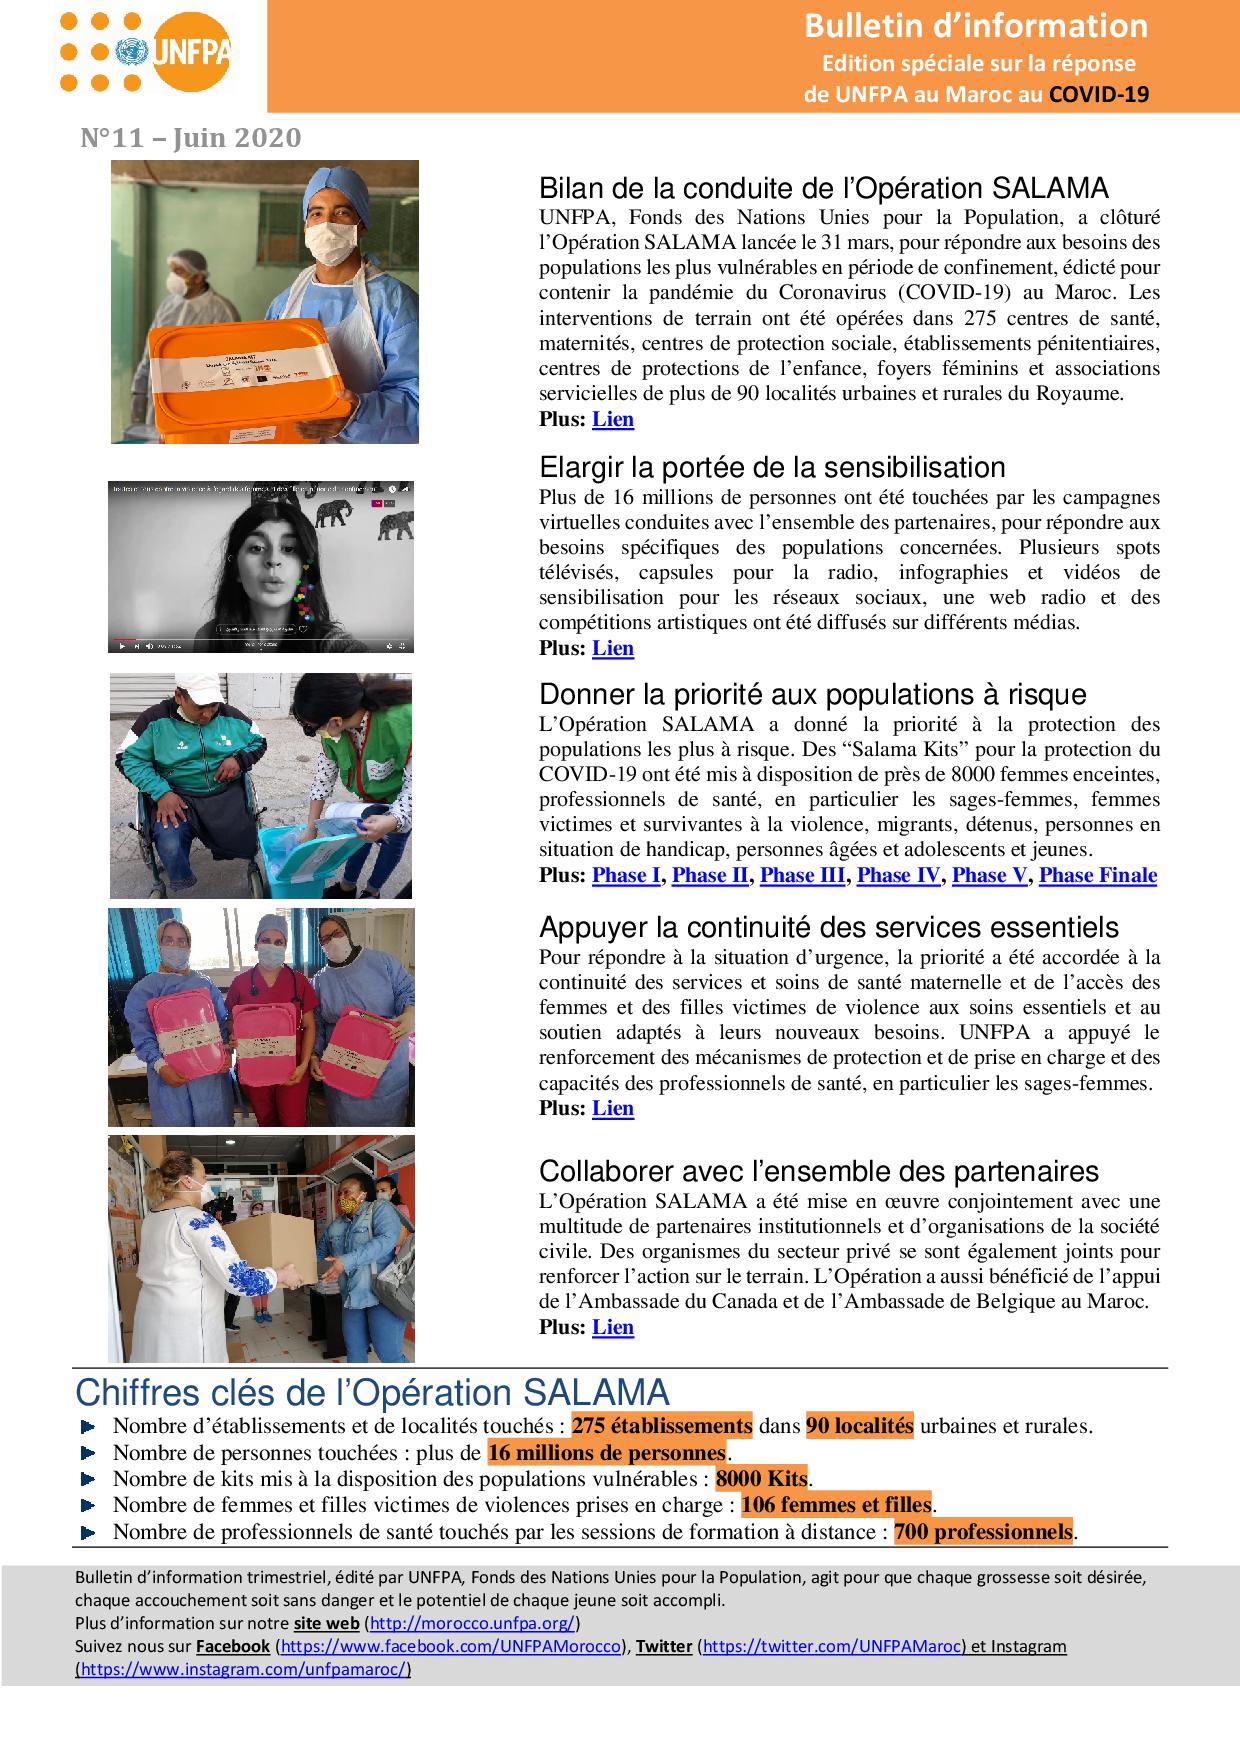 Newsletter UNFPA N°11 06-20 (Clôture de l'Opération SALAMA)